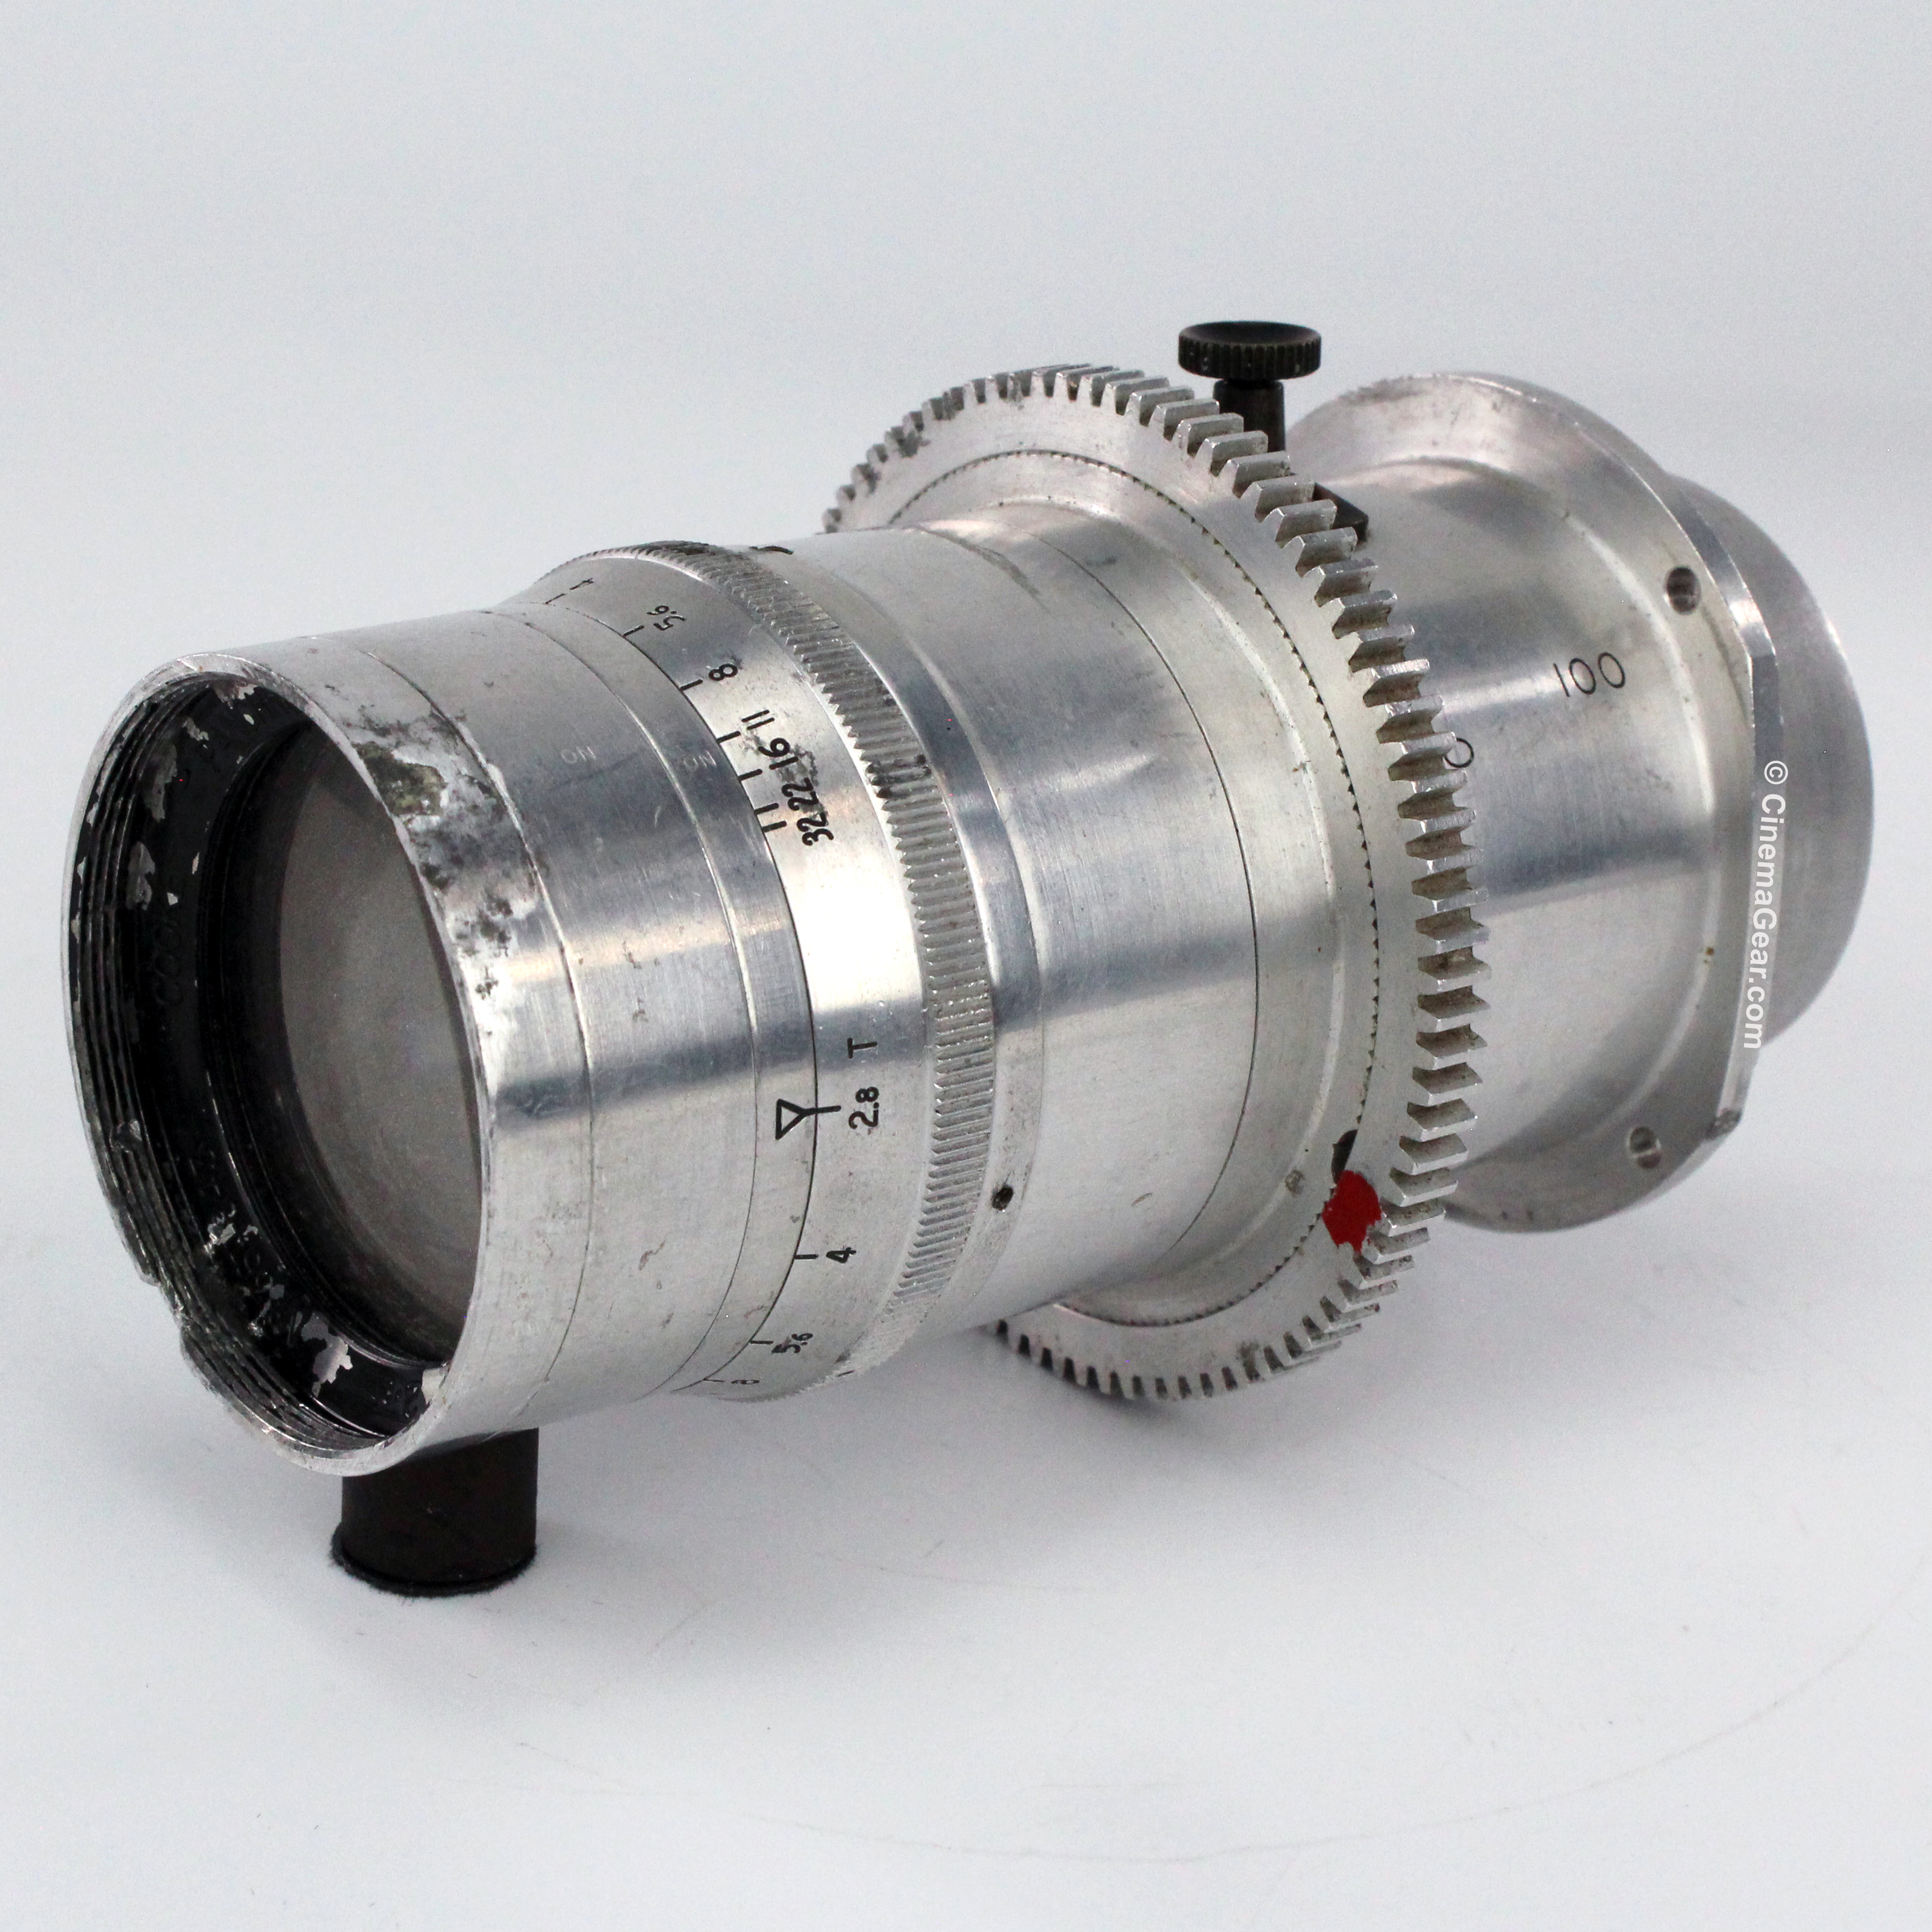 Cooke Panchrotal Anastigmat 4in T2.8 lens in Mitchell Standard mount.